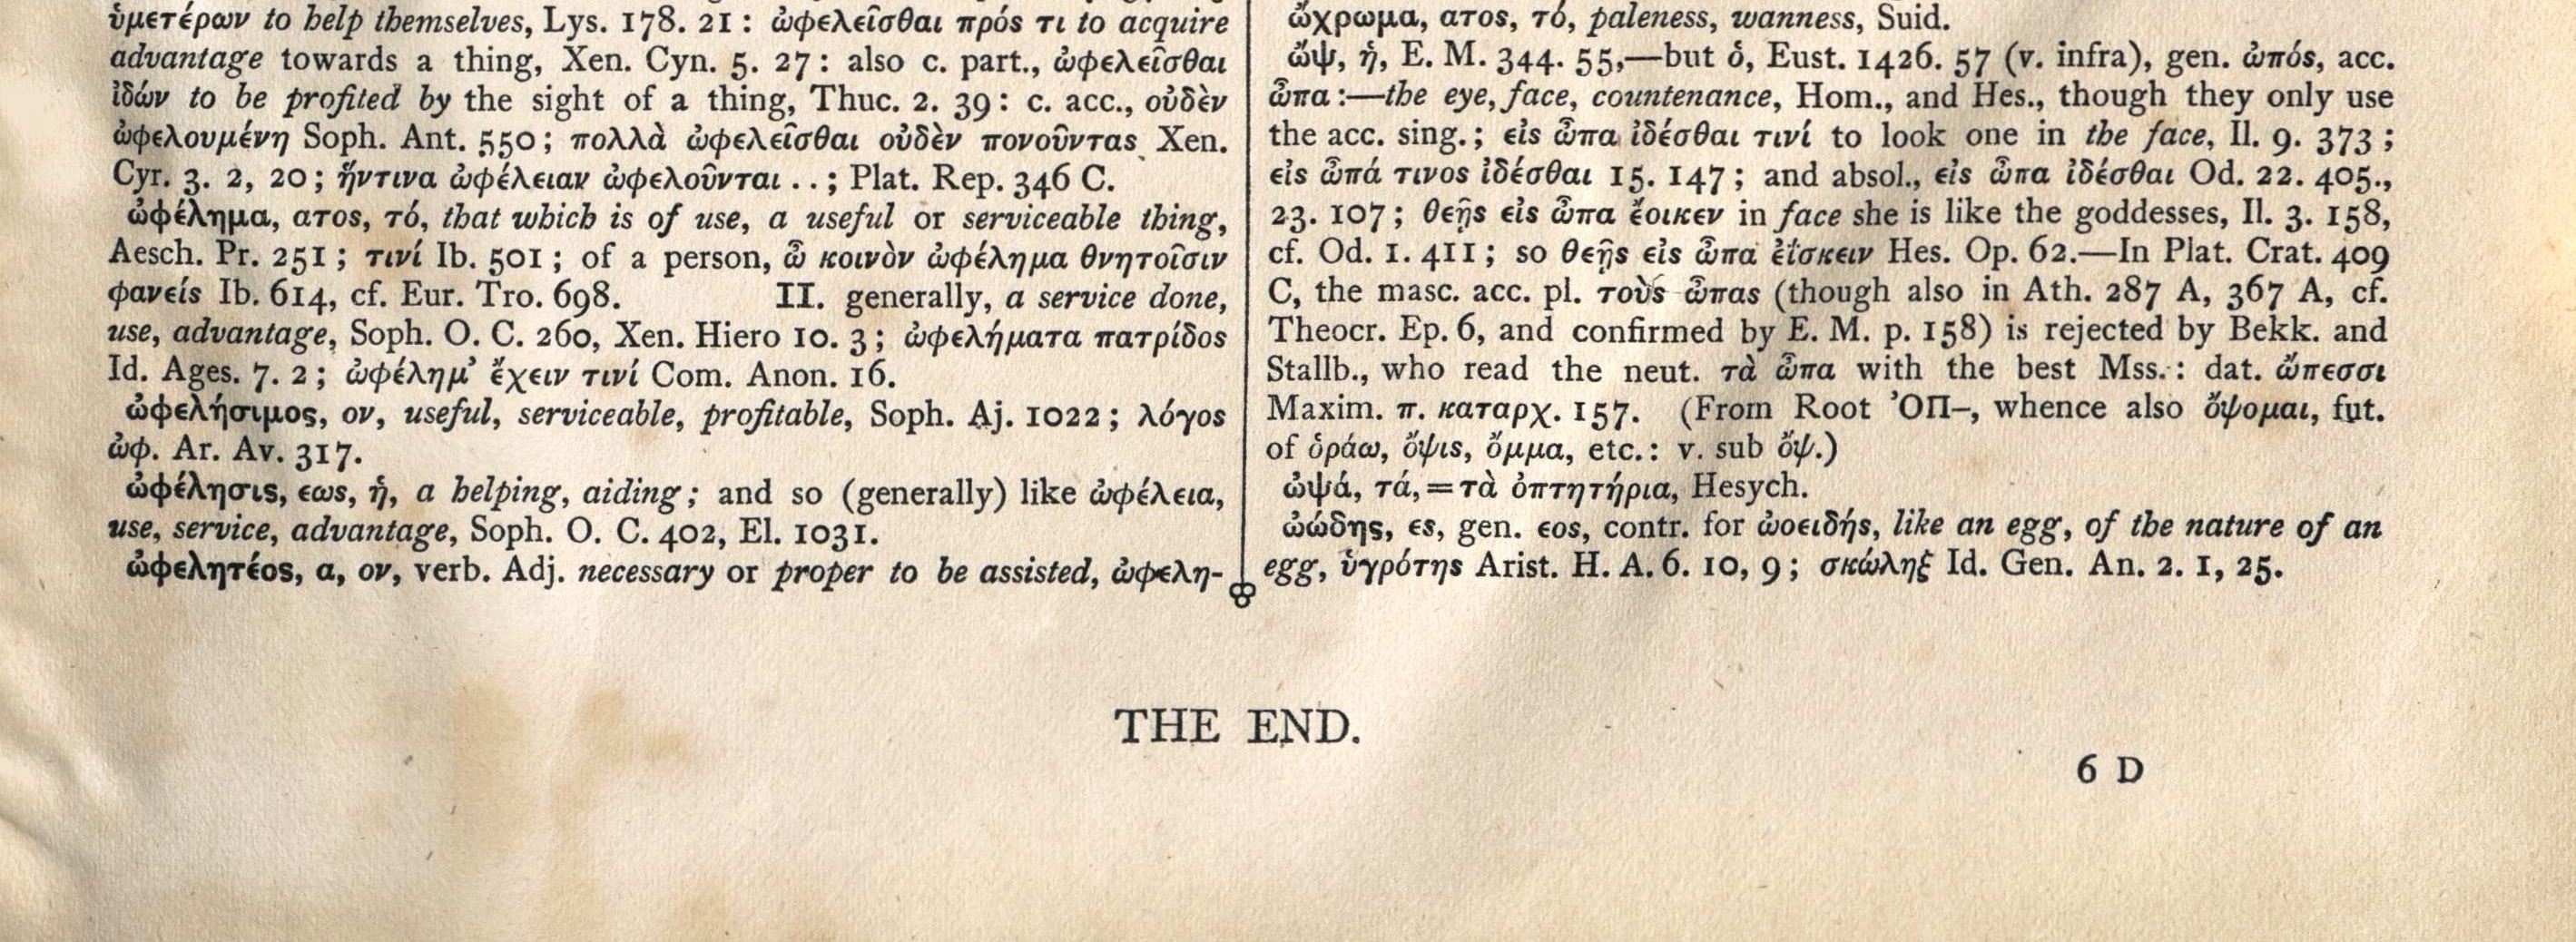 Luego de 1865 páginas, sorprende encontrarse con "the end", a manera de colofón.